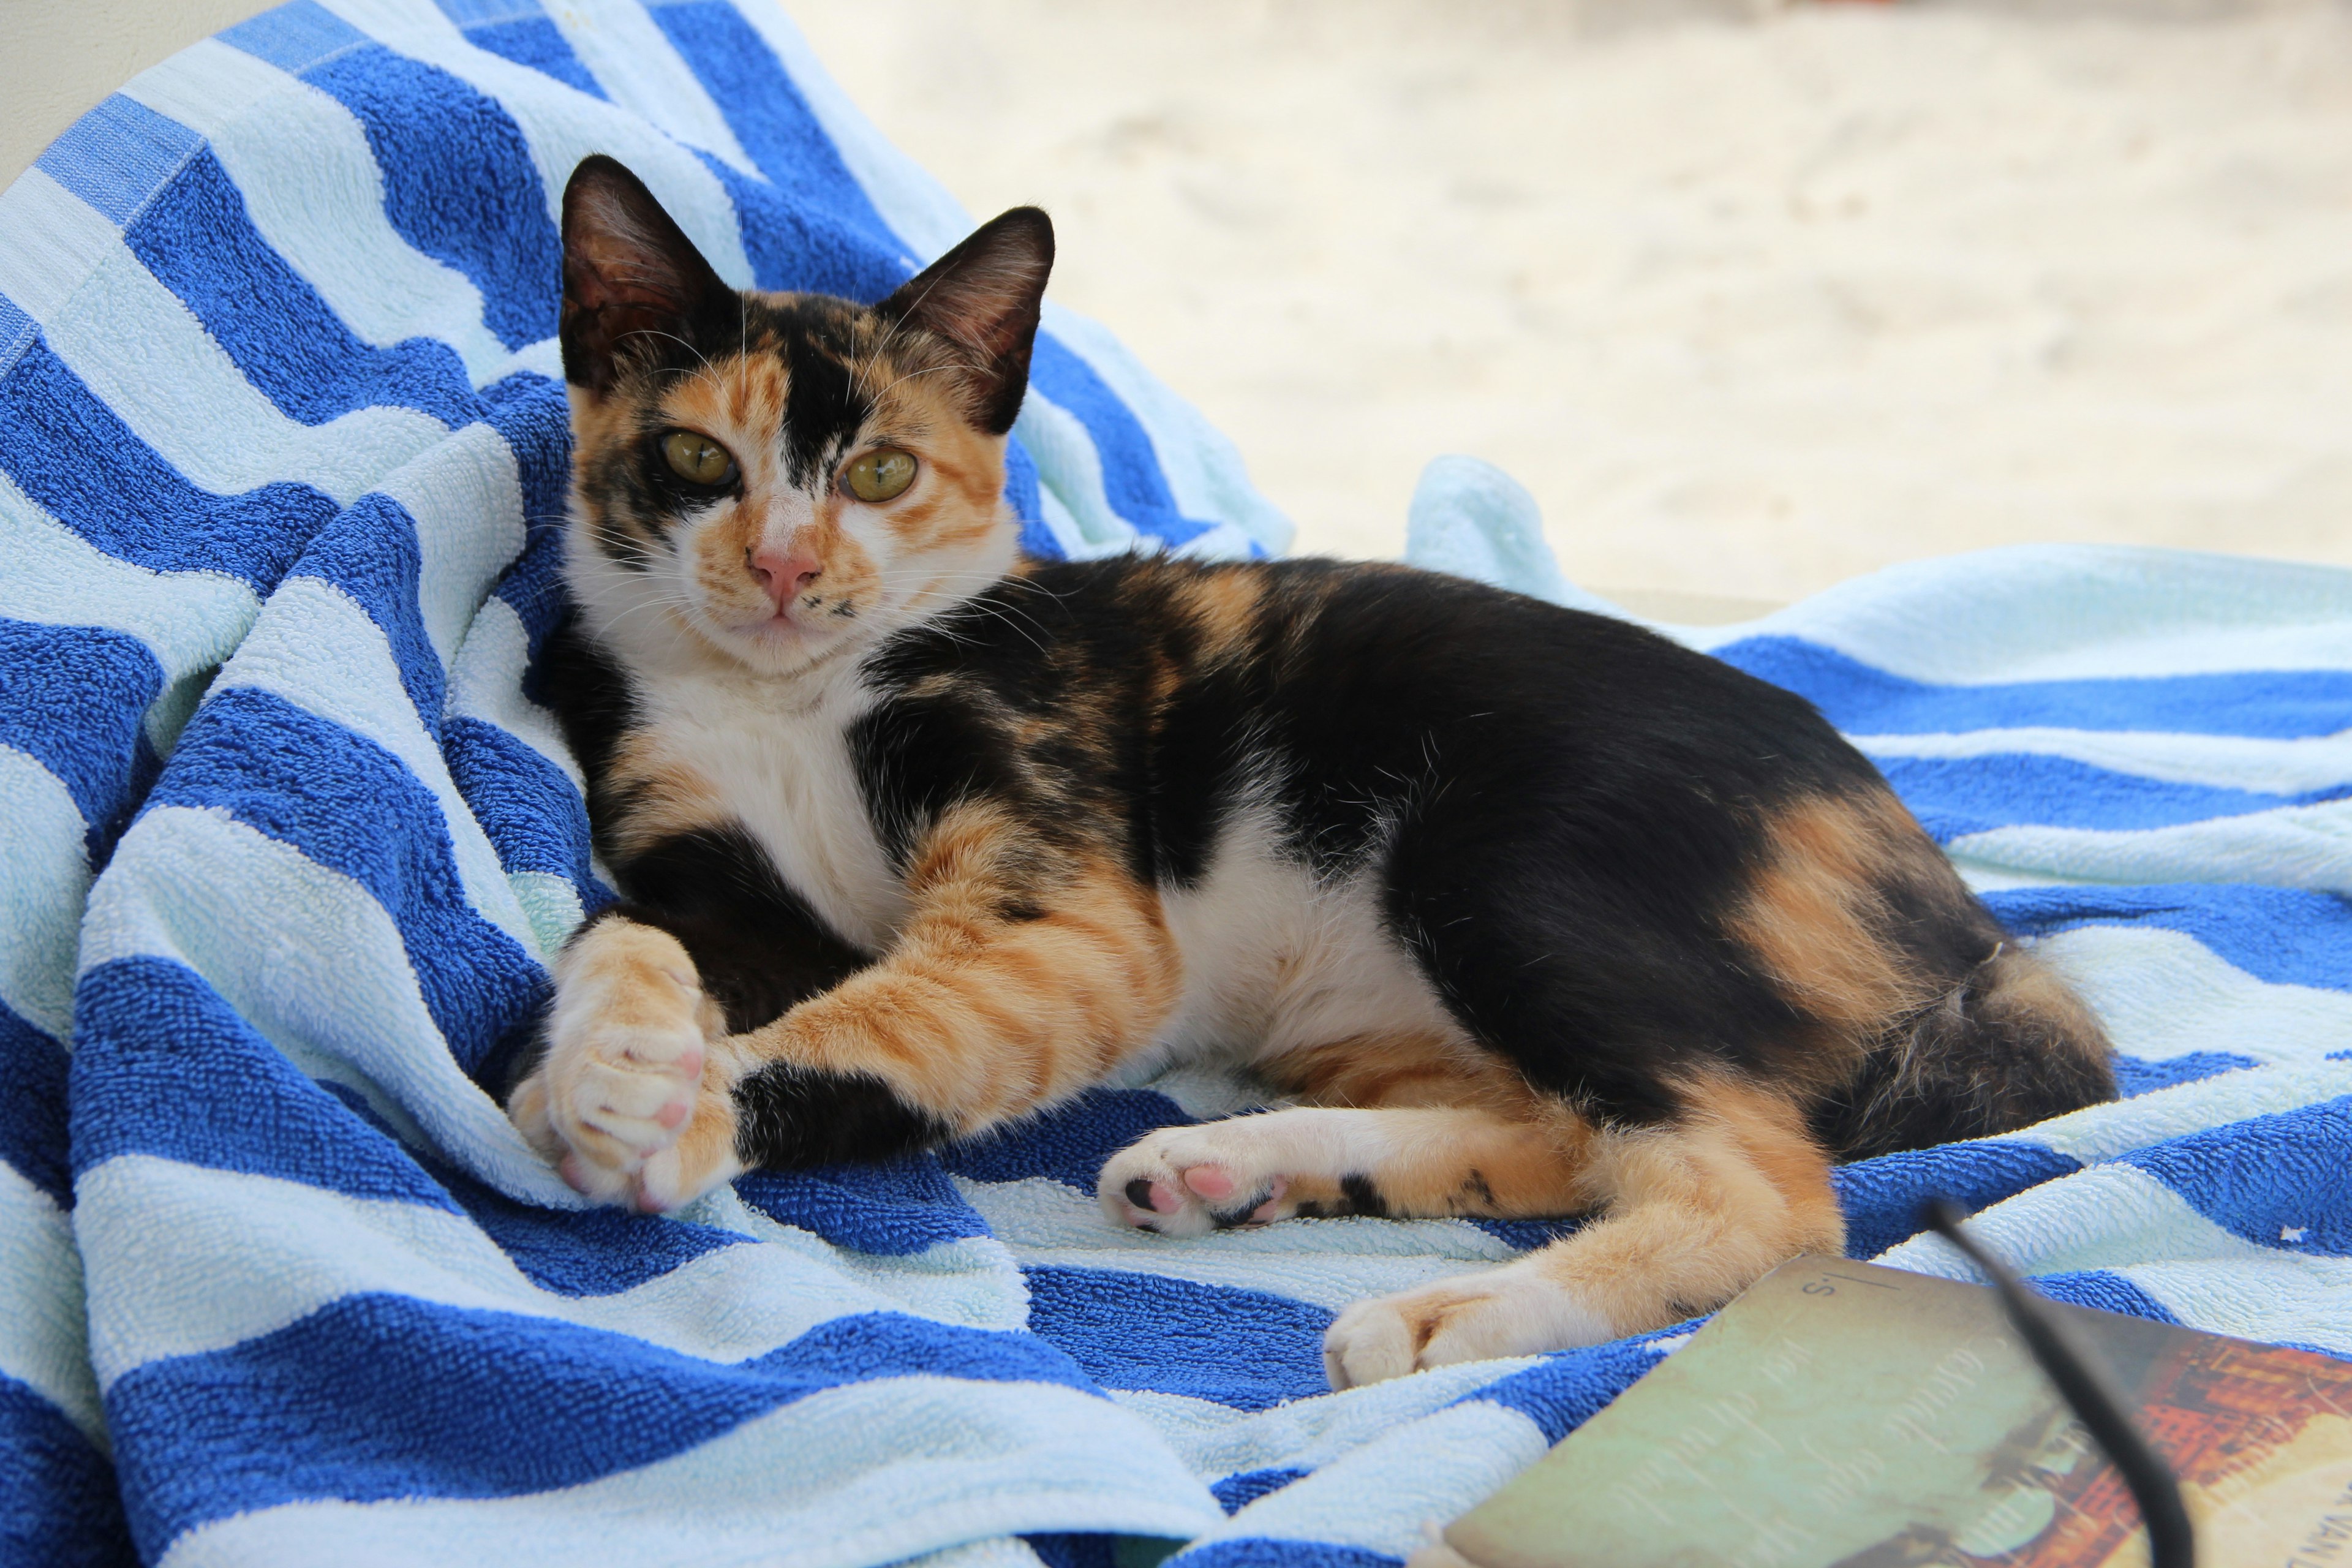 Orange and black Cat on a beach towel